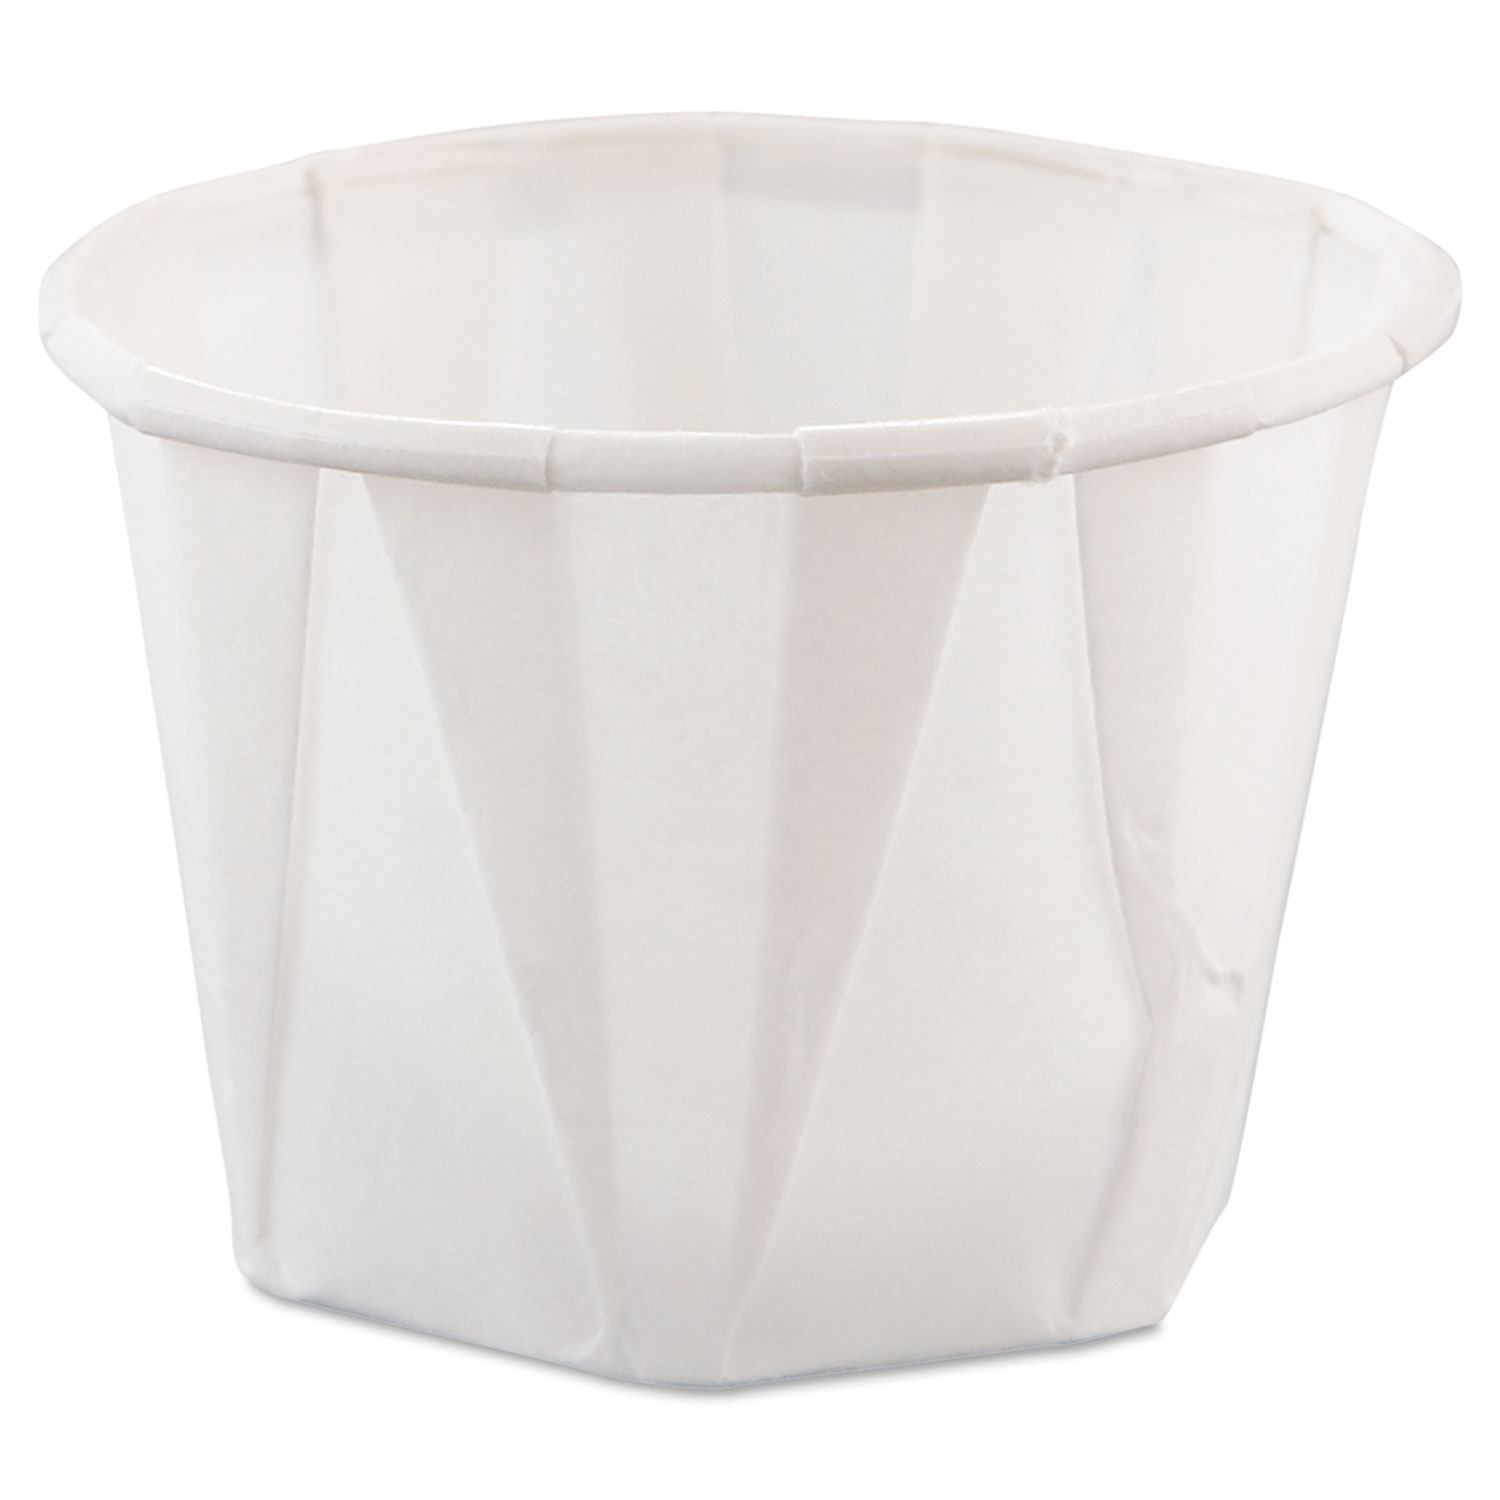  Dart 100-2050 Paper Portion Cups, 1oz, White, 250/Bag, 20 Bags/Carton (SCC100) 